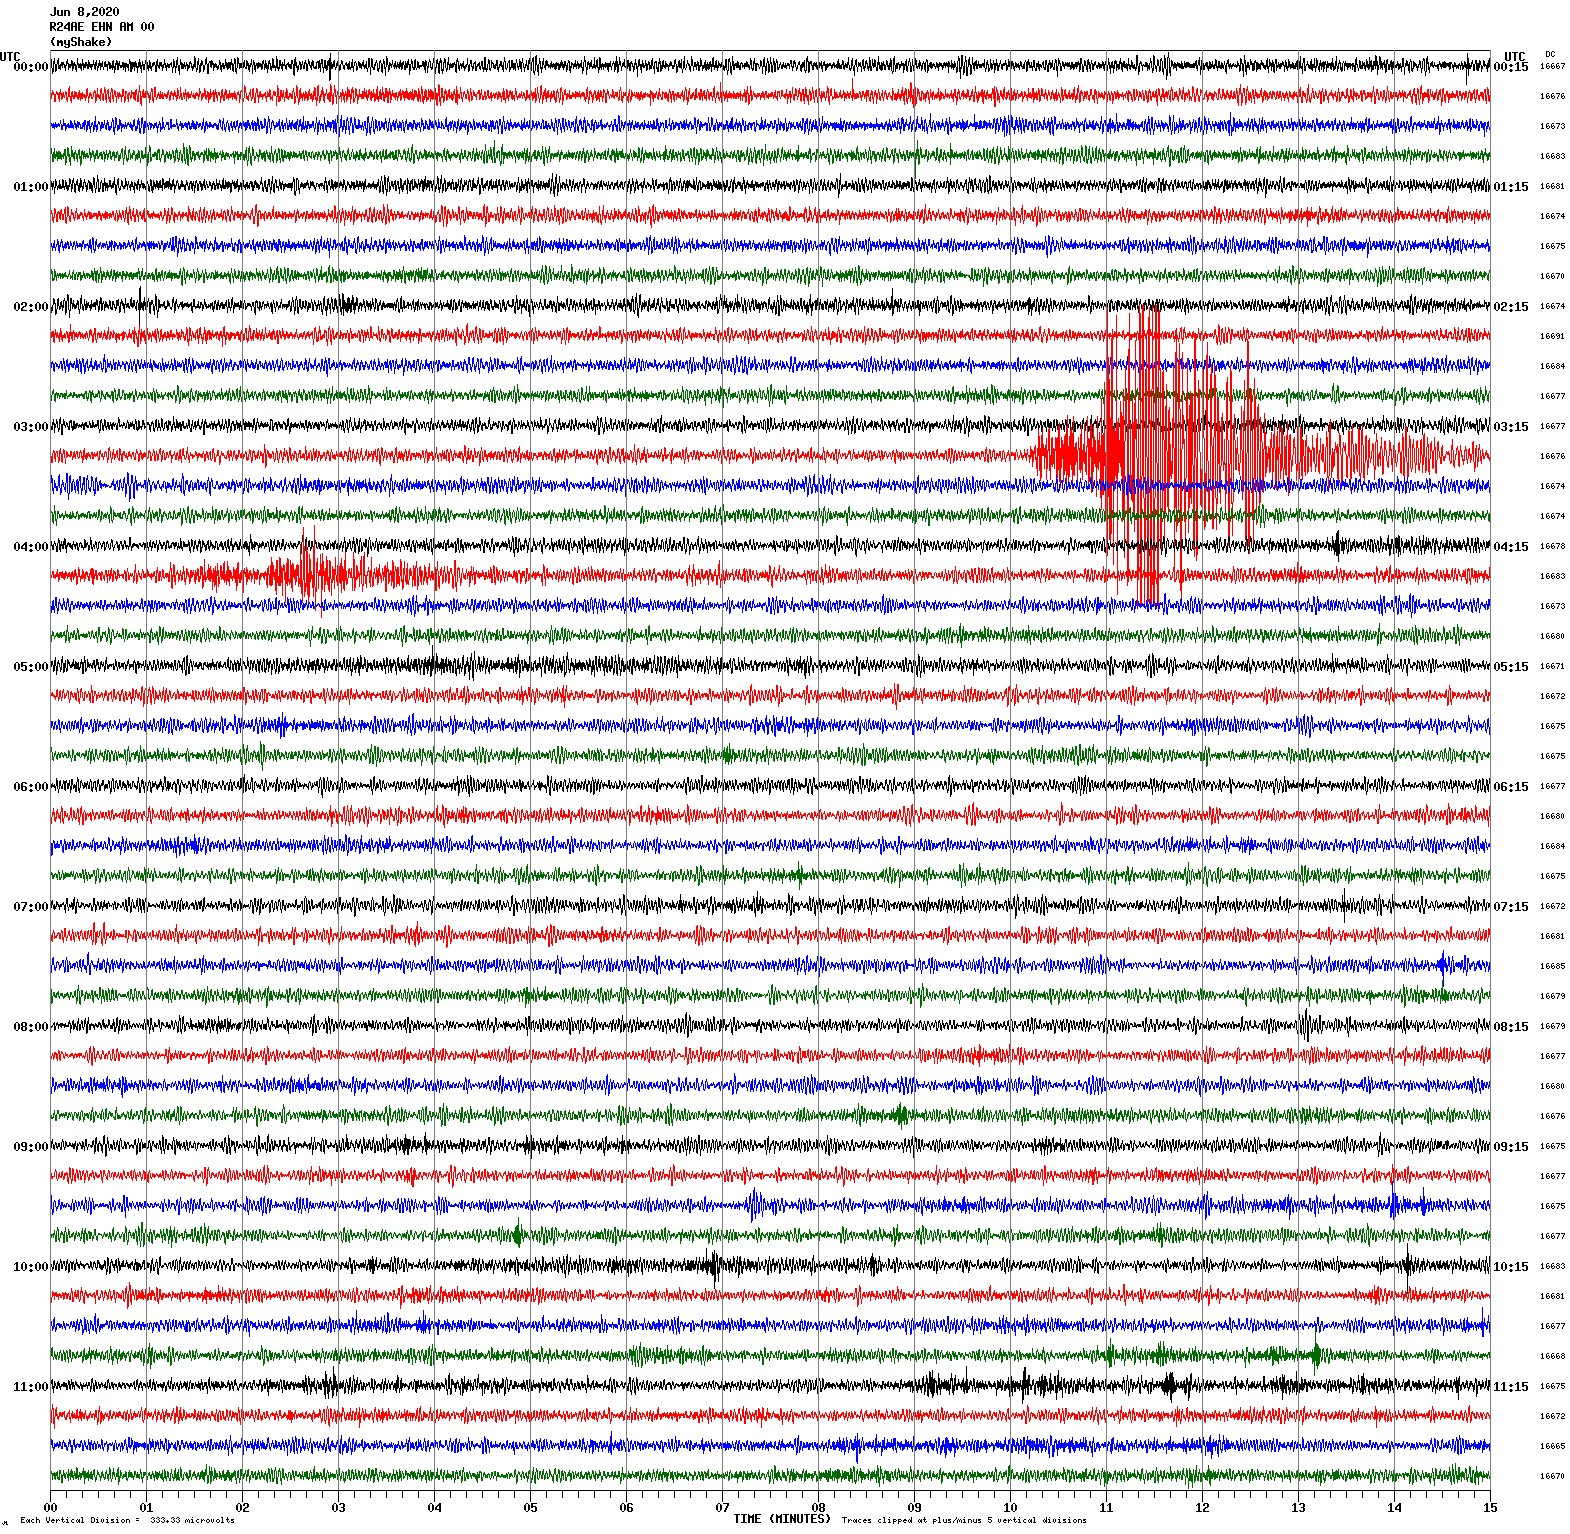 /seismic-data/R24AE/R24AE_EHN_AM_00.2020060800.gif